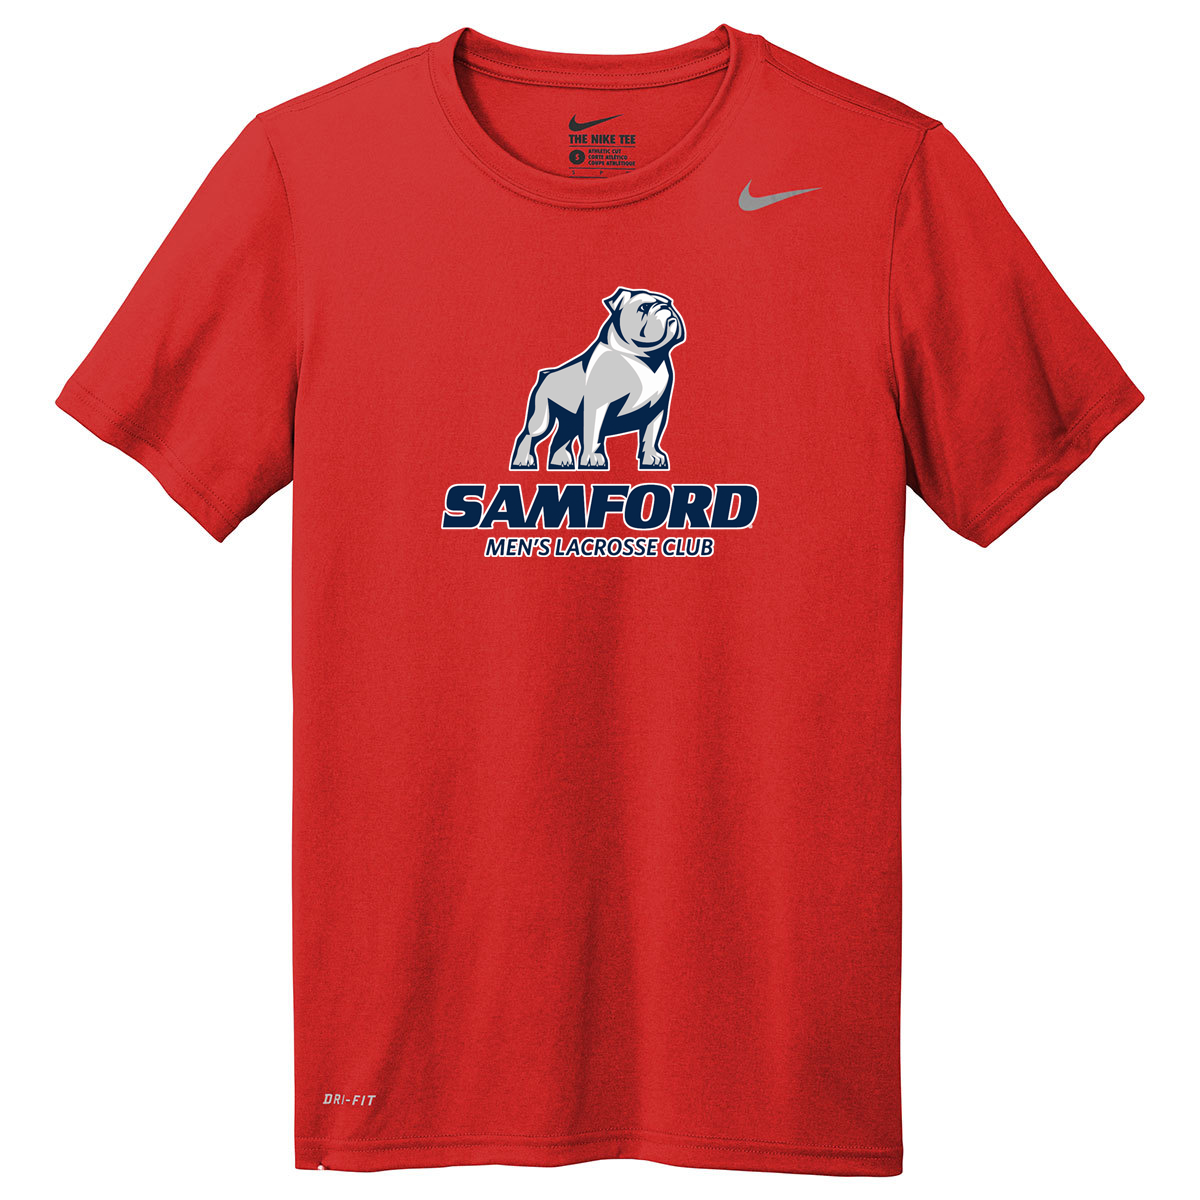 Samford University Lacrosse Club Nike Legend Tee